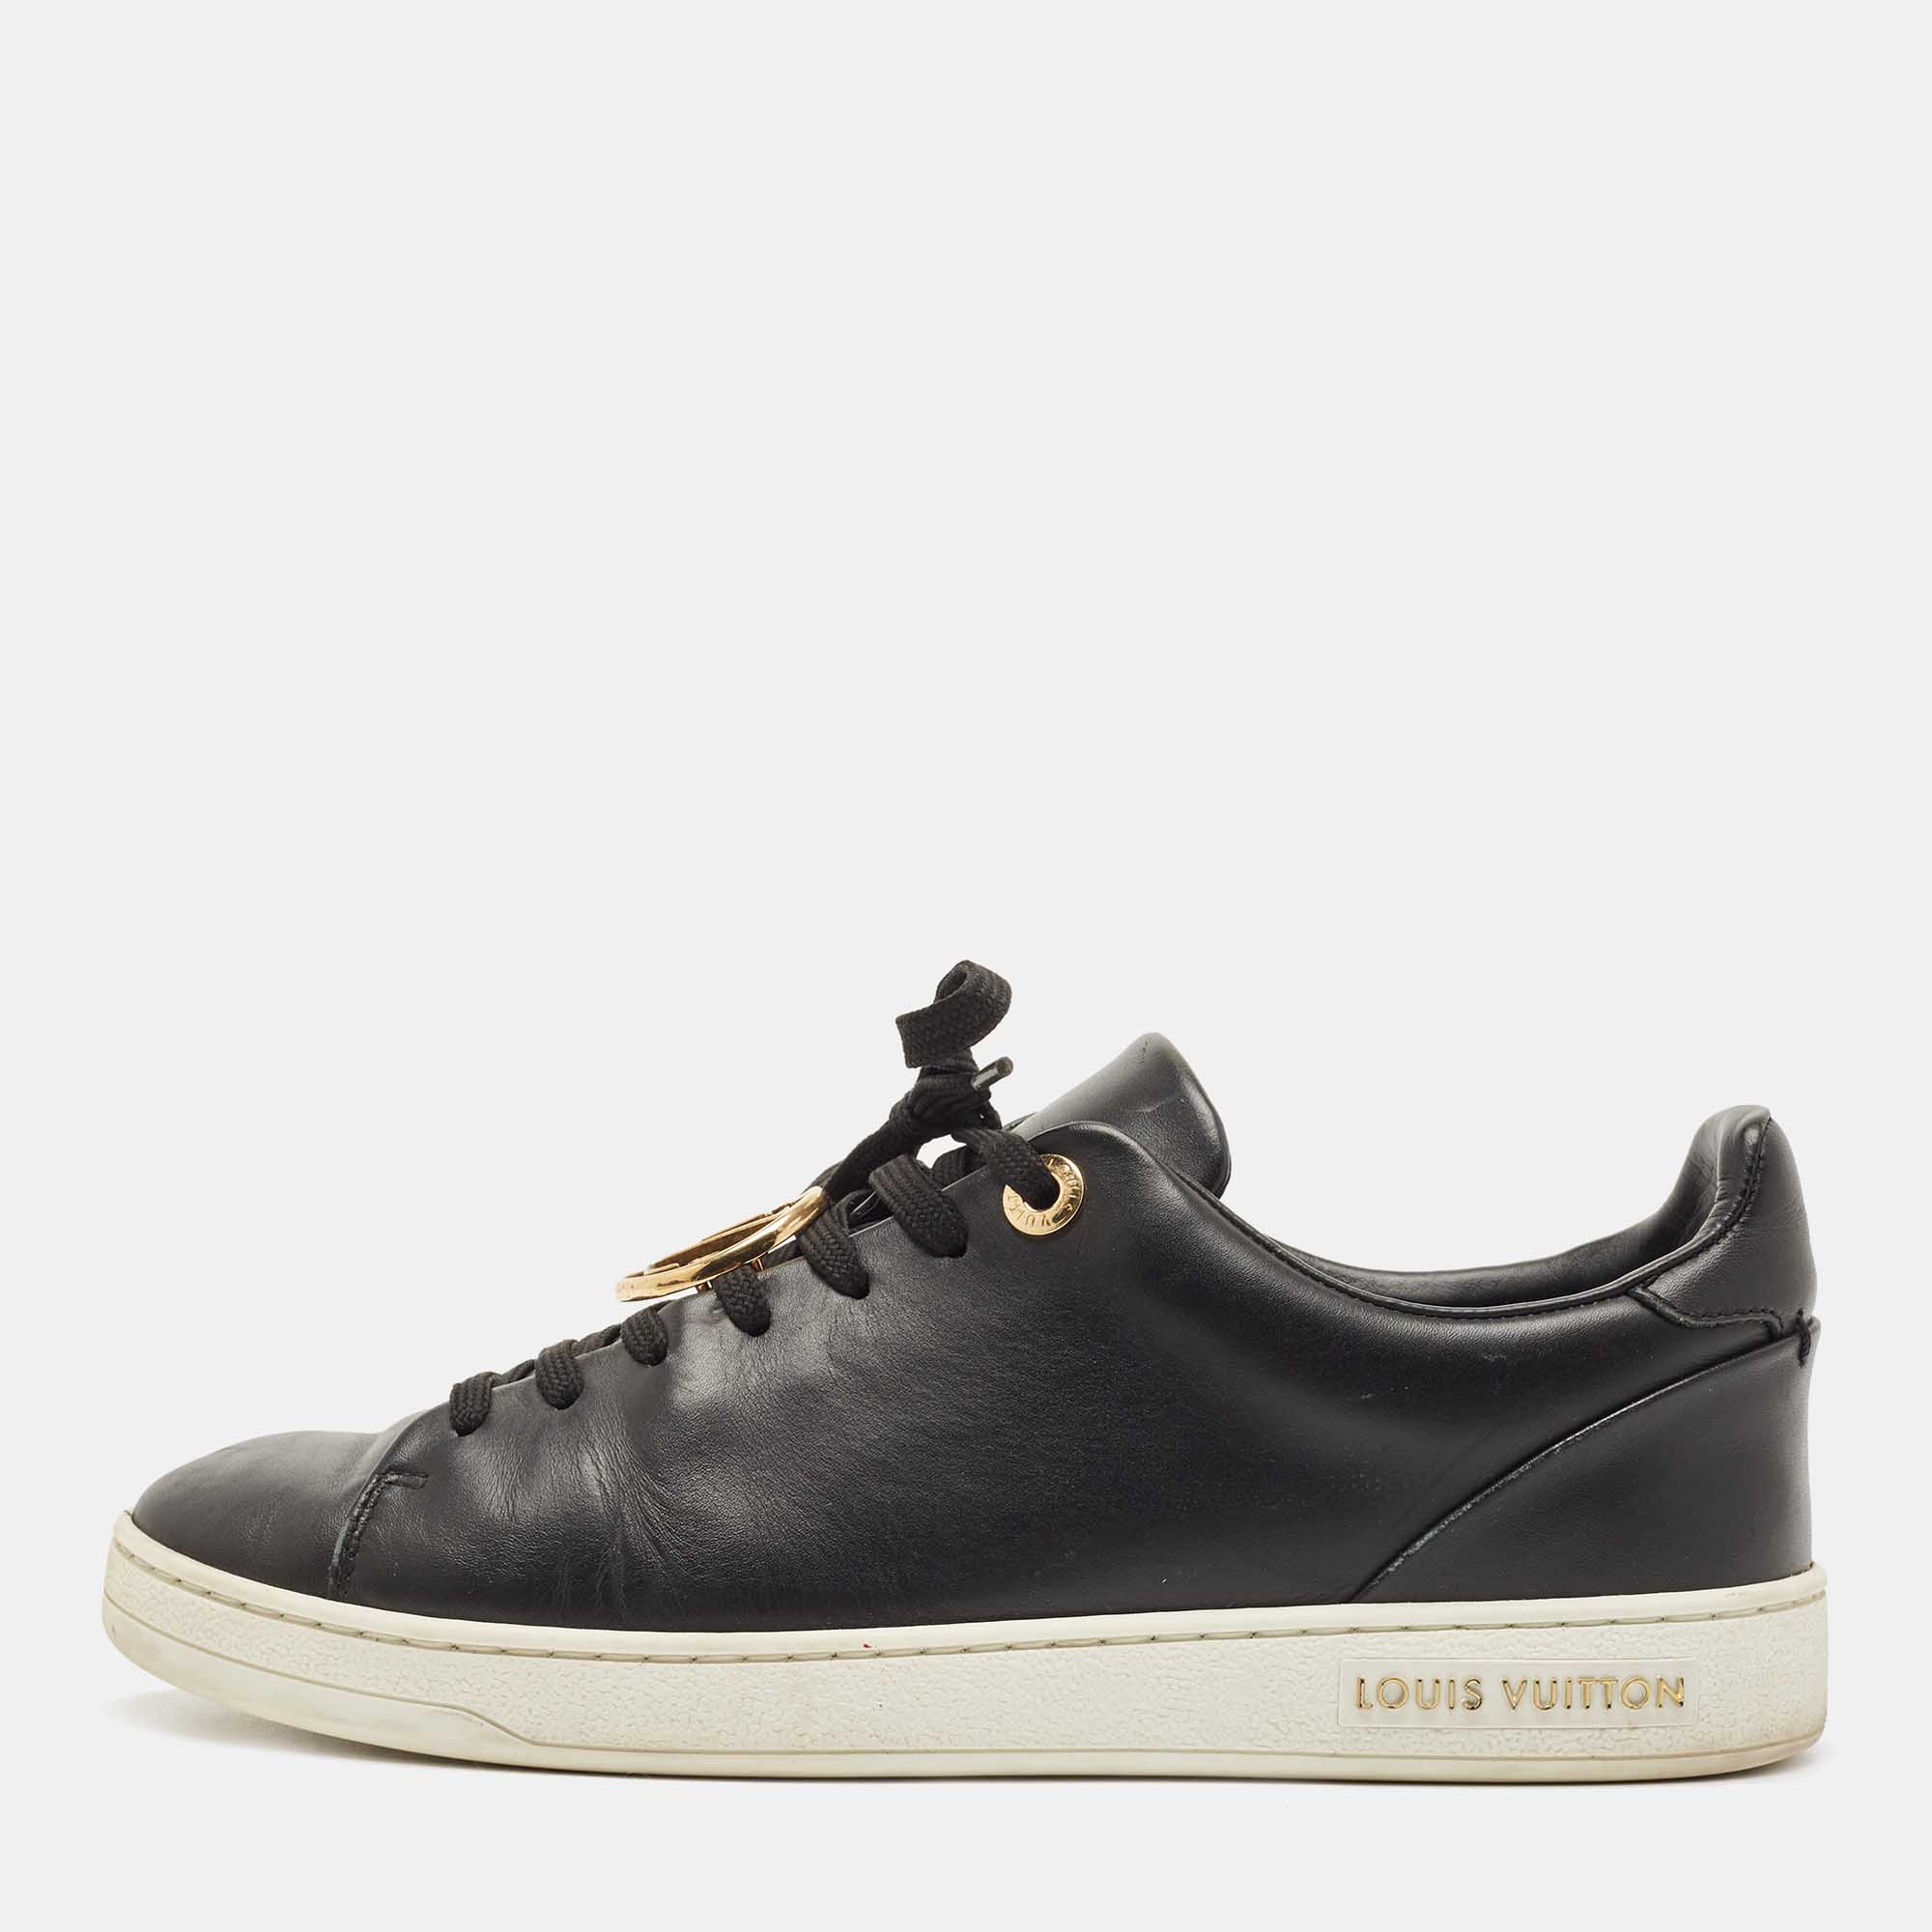 Run away patent leather trainers Louis Vuitton Black size 36.5 EU